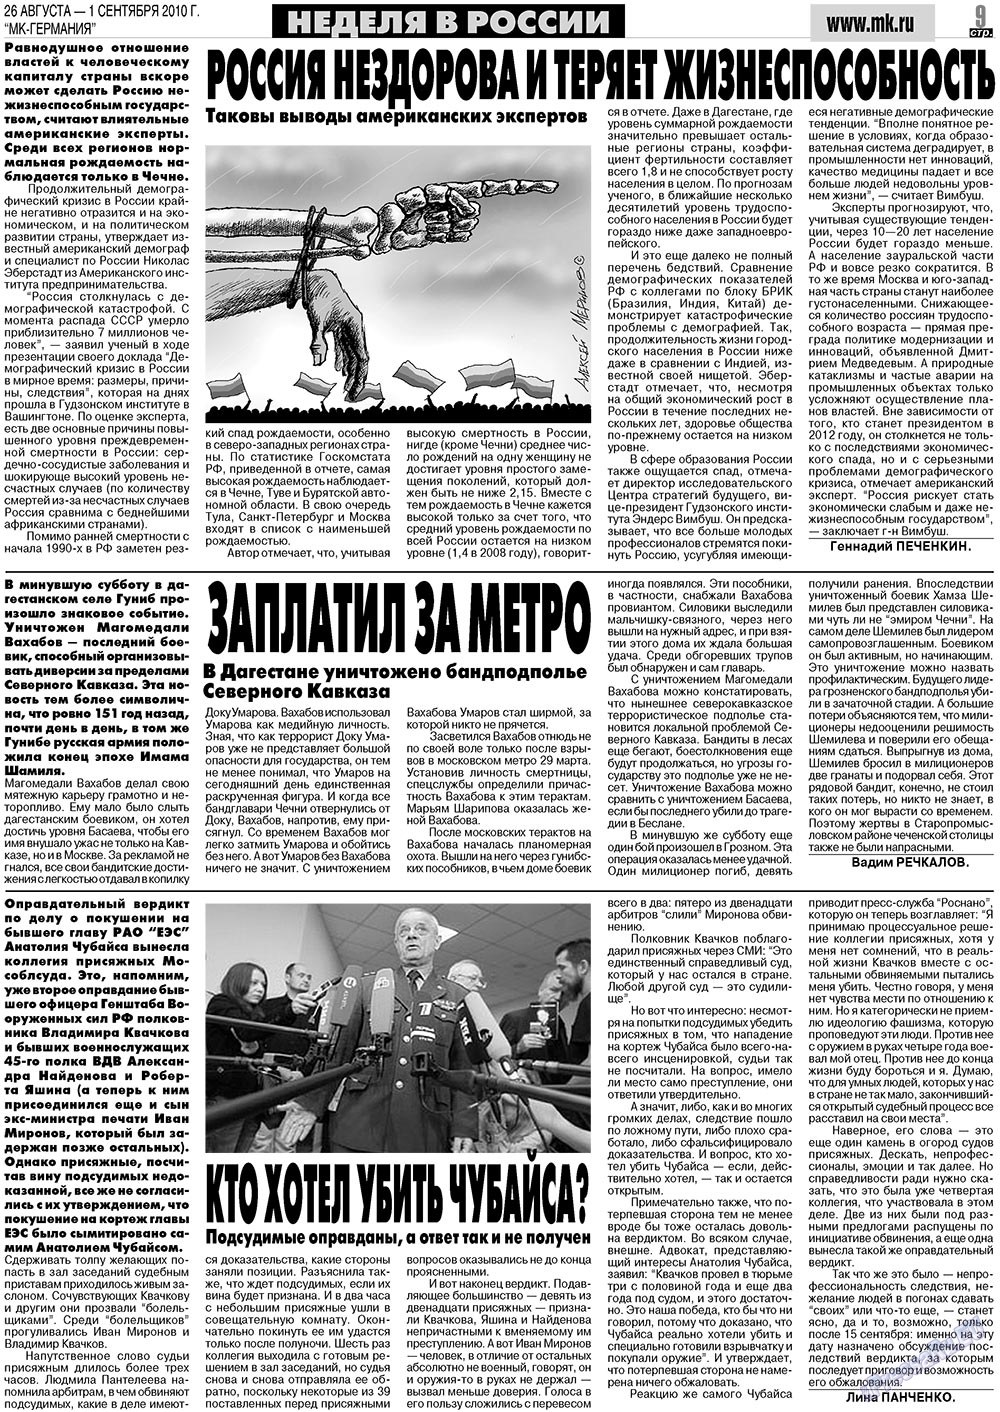 МК-Германия, газета. 2010 №35 стр.9